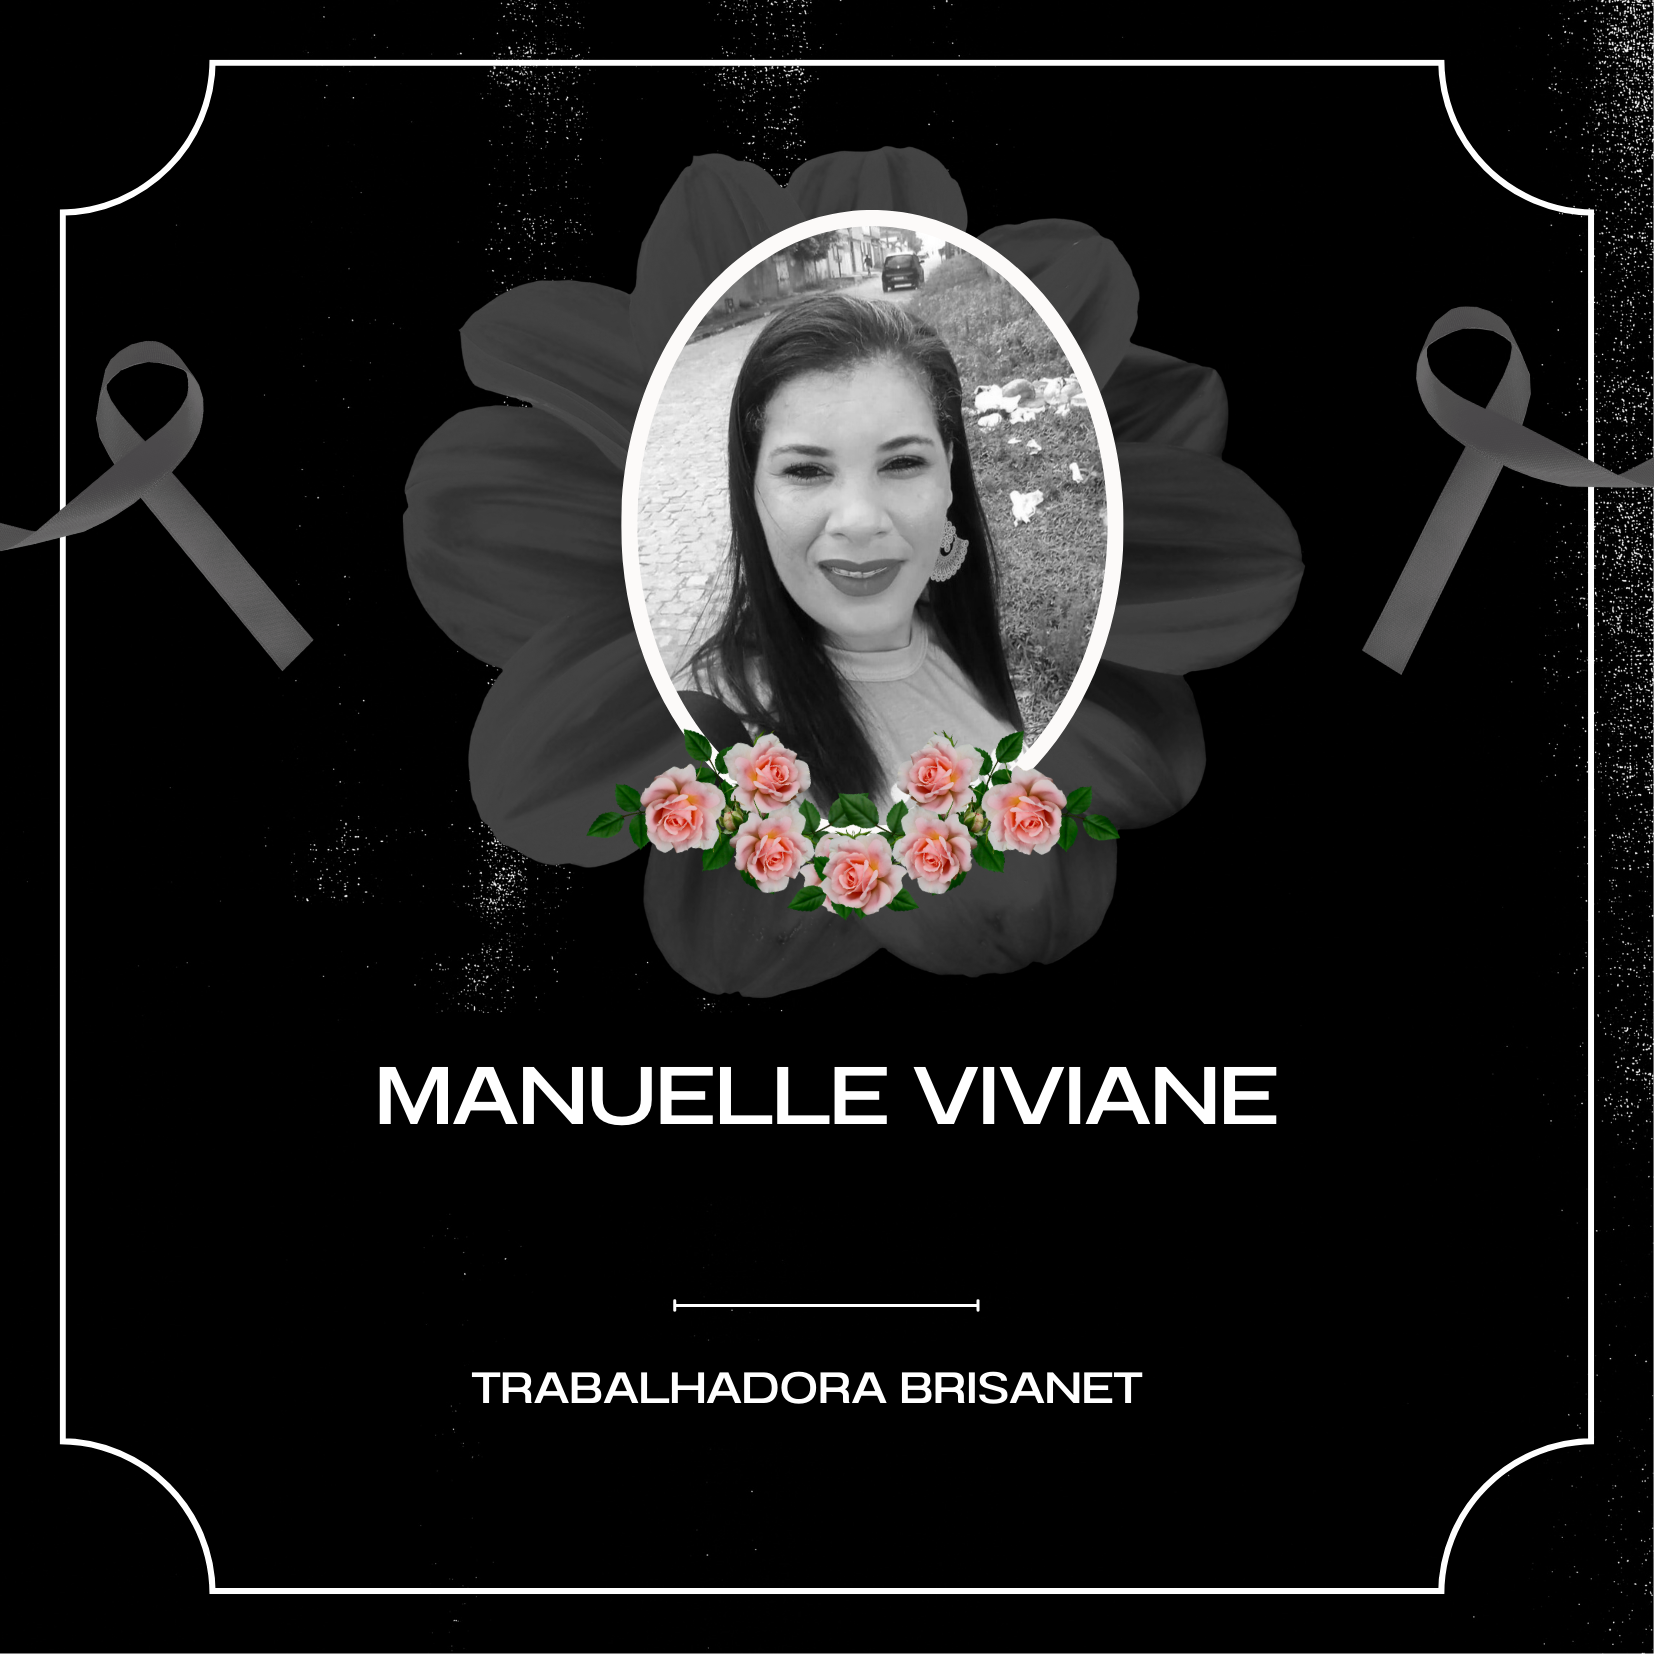 NOTA DE PESAR: Manuelle Viviane – Brisanet 